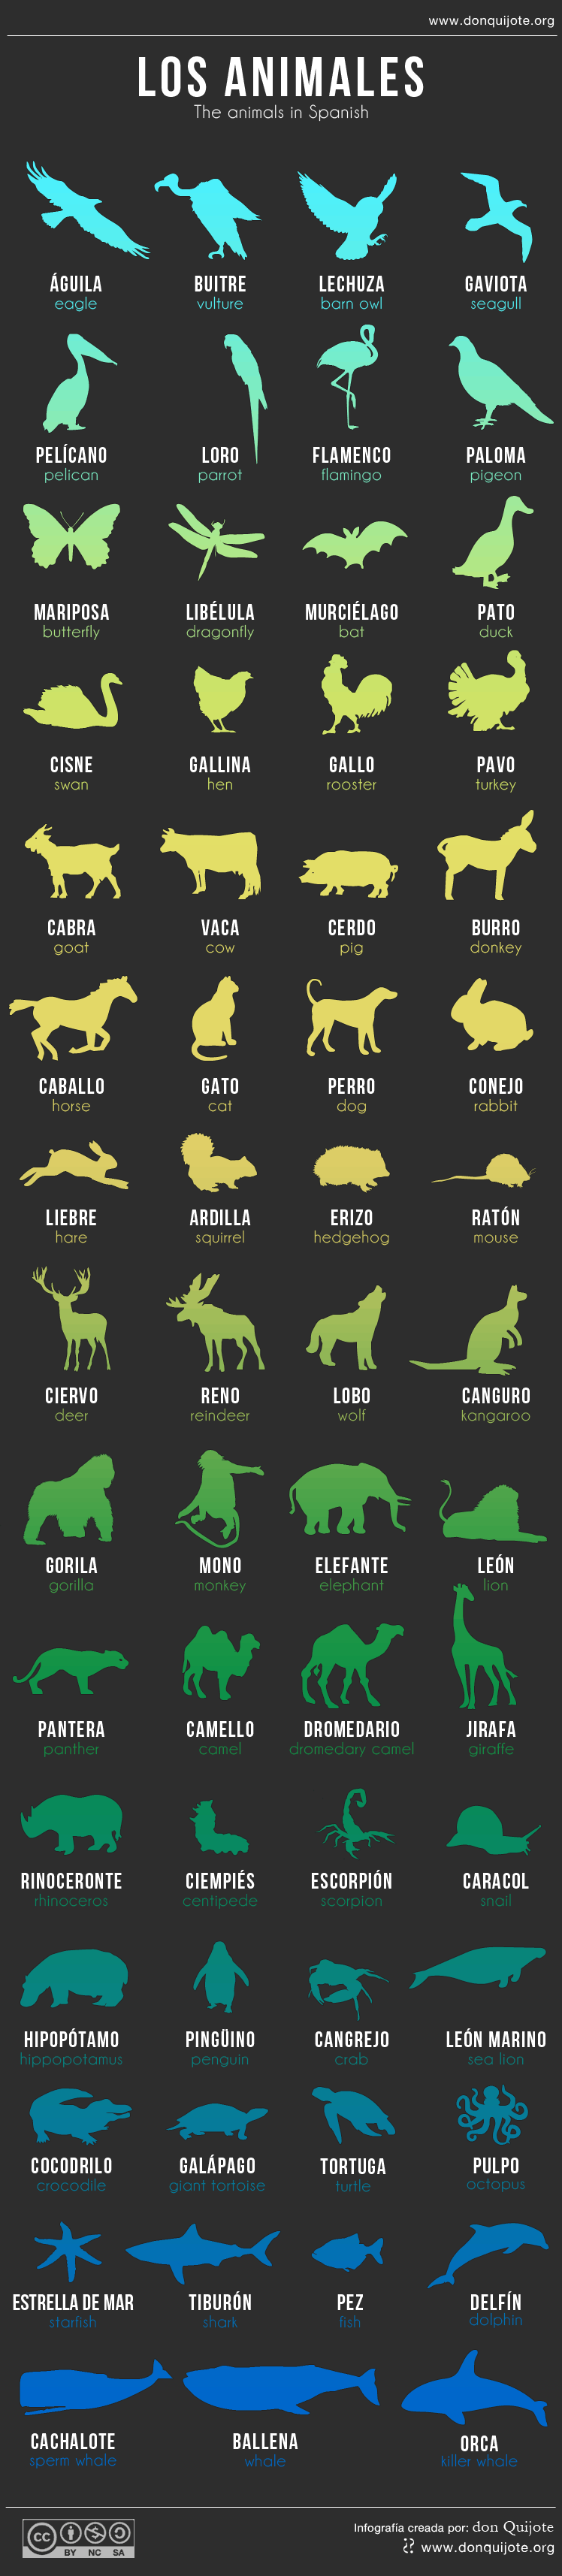 Los Animales: Animal Names in Spanish